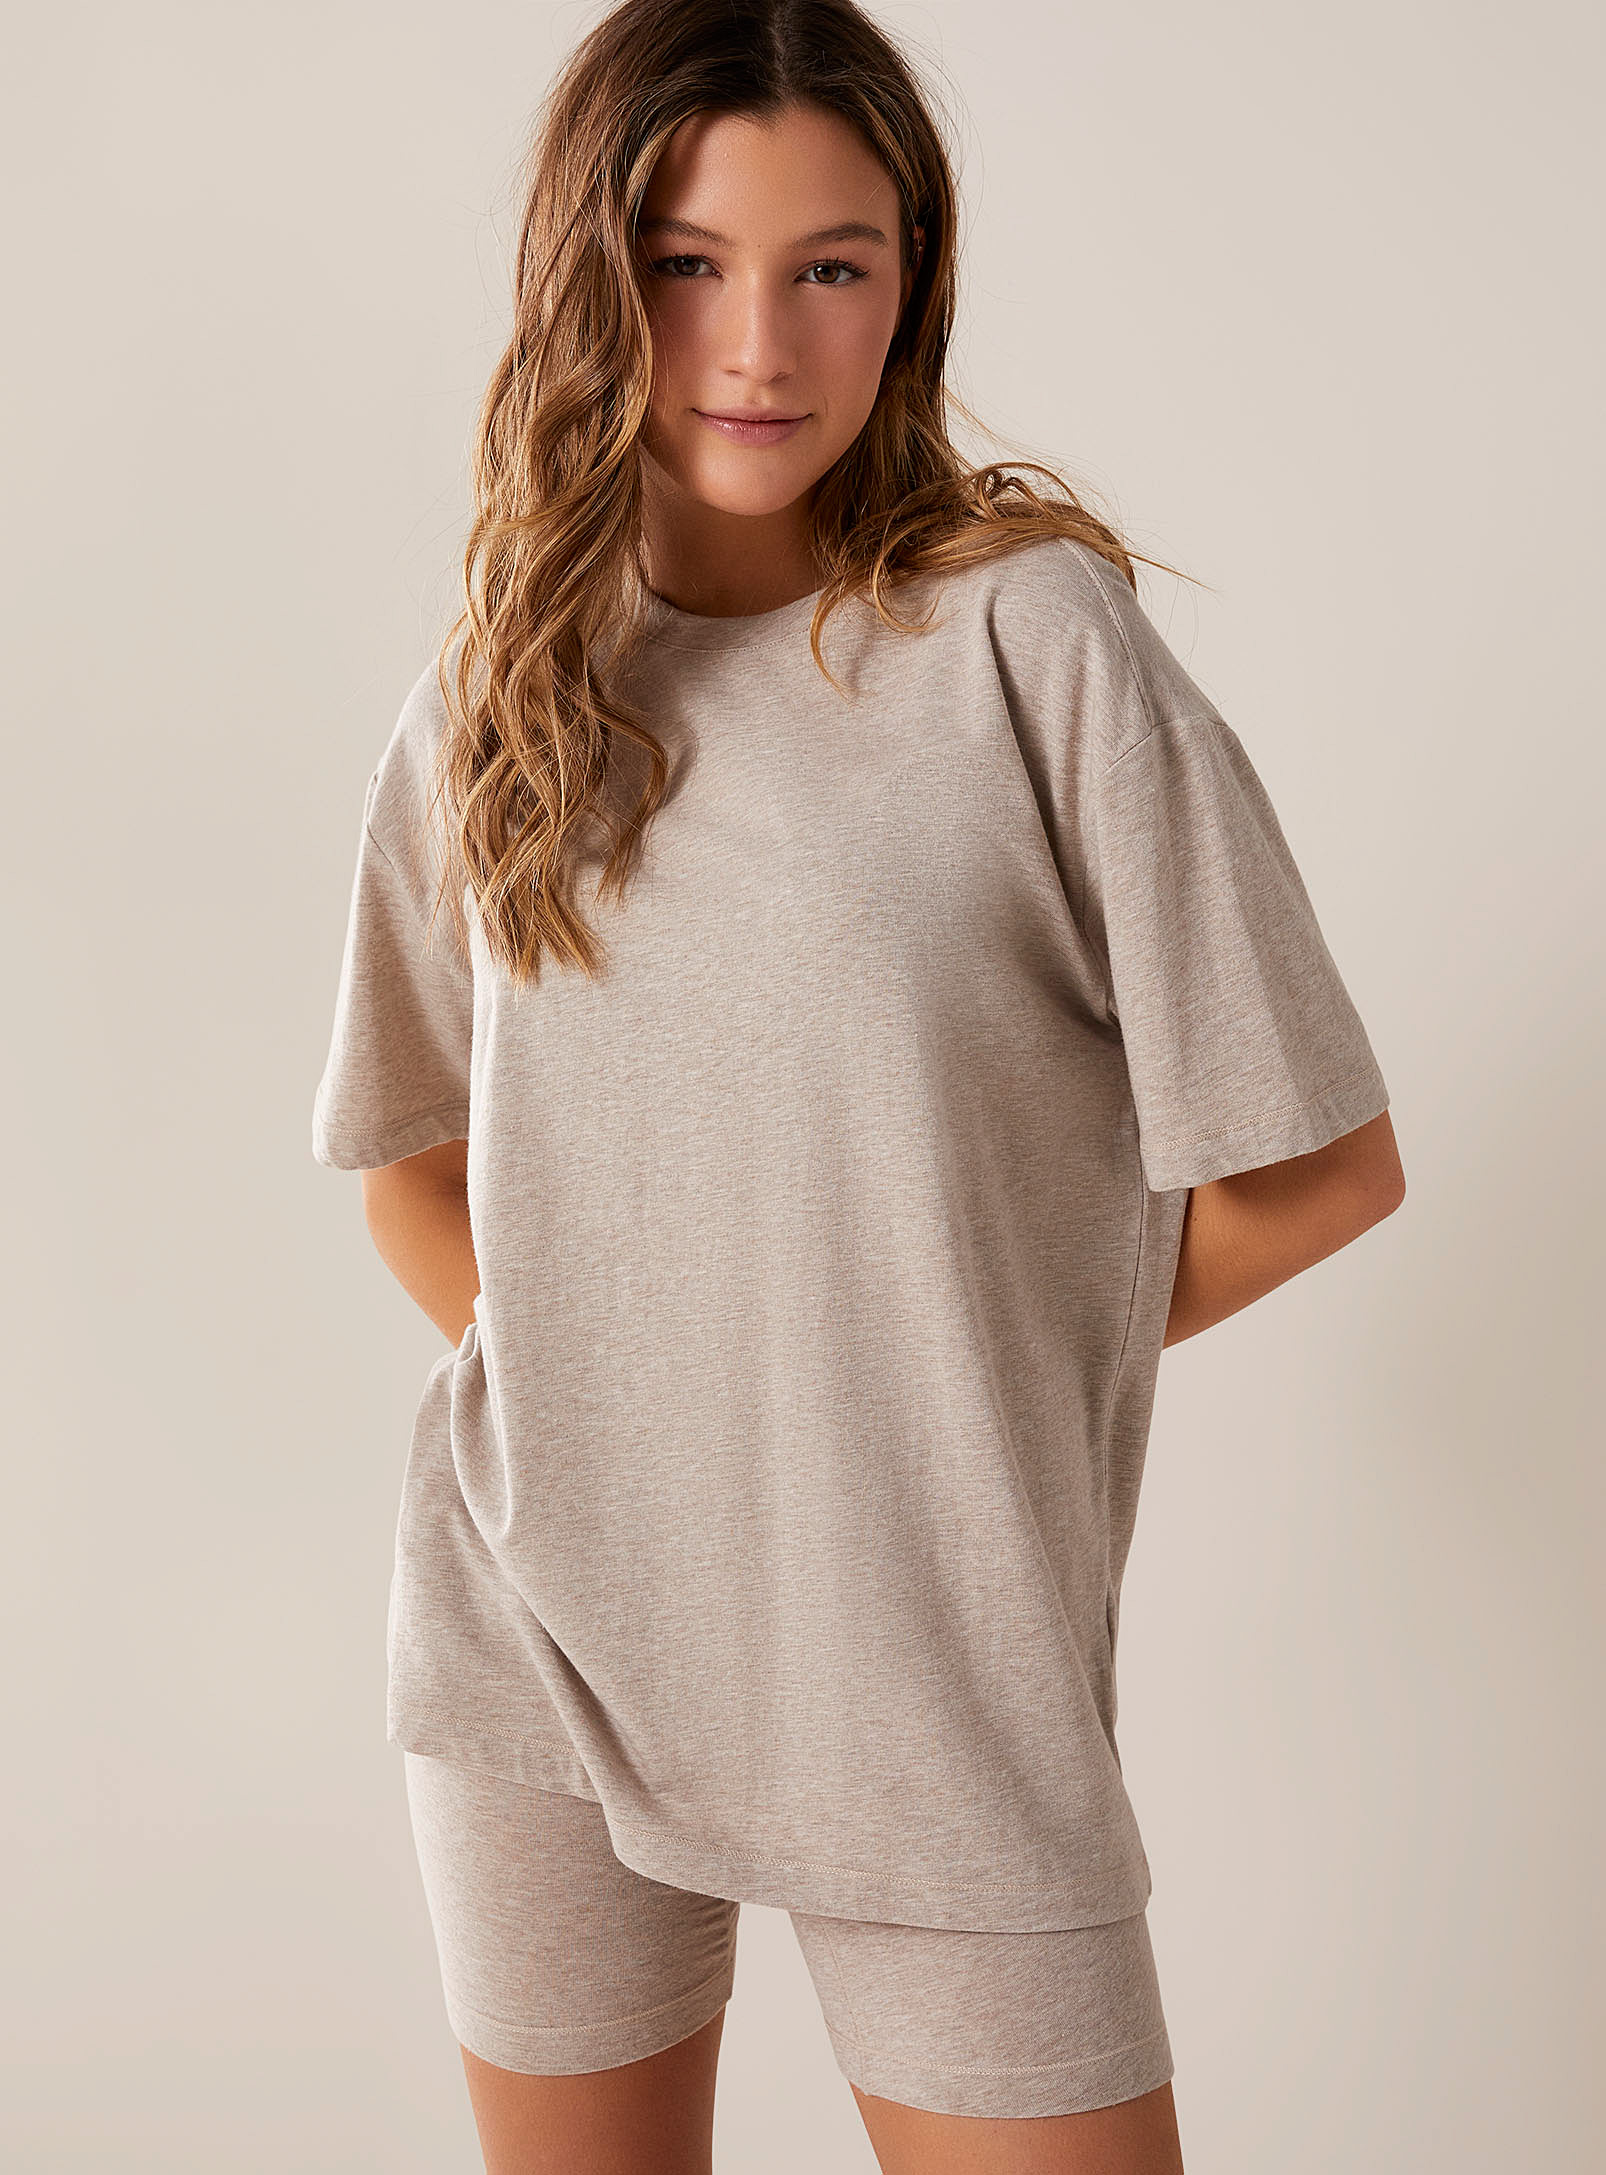 Miiyu X Twik Heathered Modal And Organic Cotton Lounge T-shirt In Cream Beige